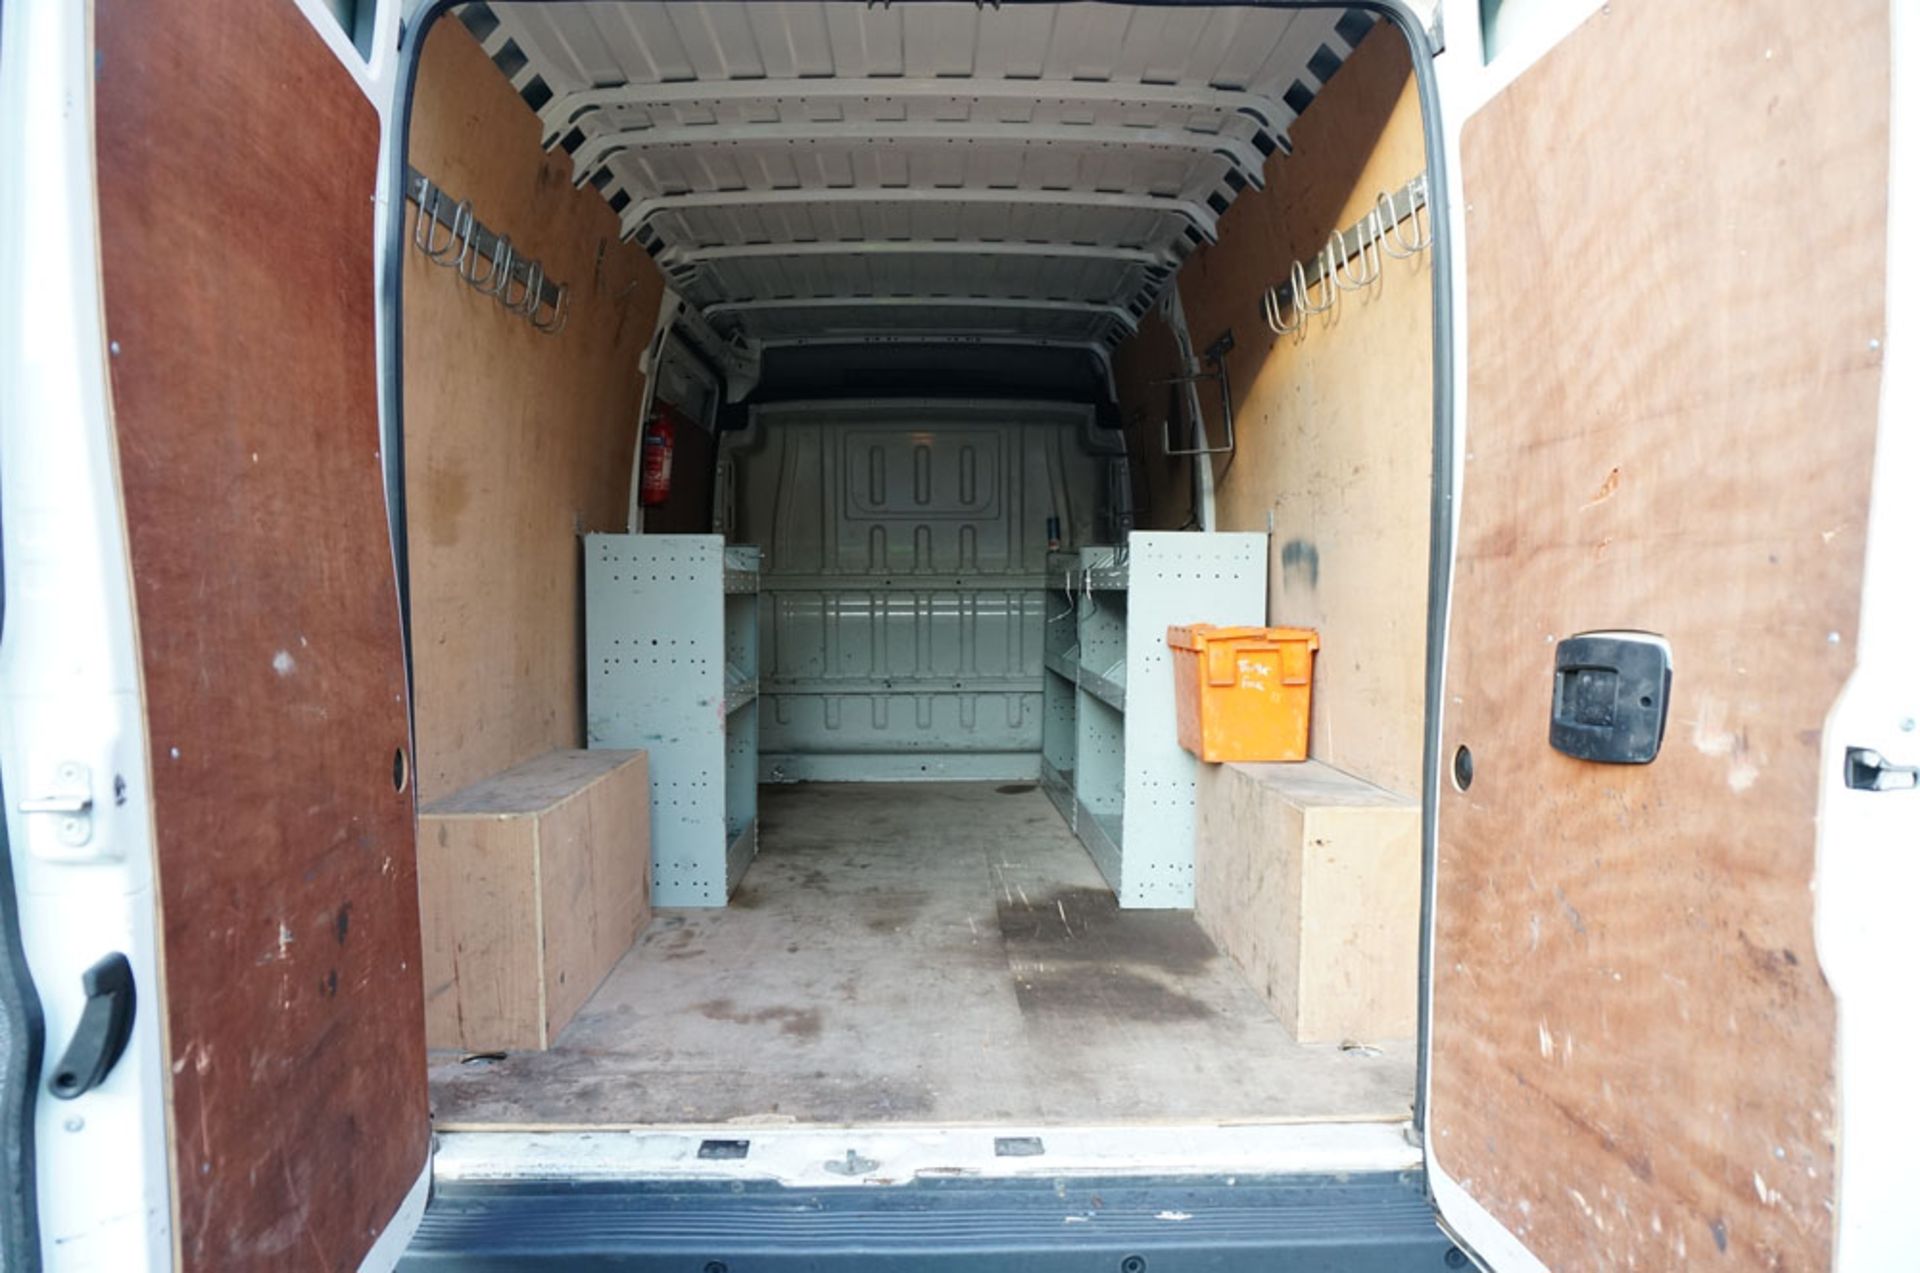 PEUGEOT Boxer 335Pro Panel Van, 130PS HDI, 2016 (66 reg) - Image 7 of 10